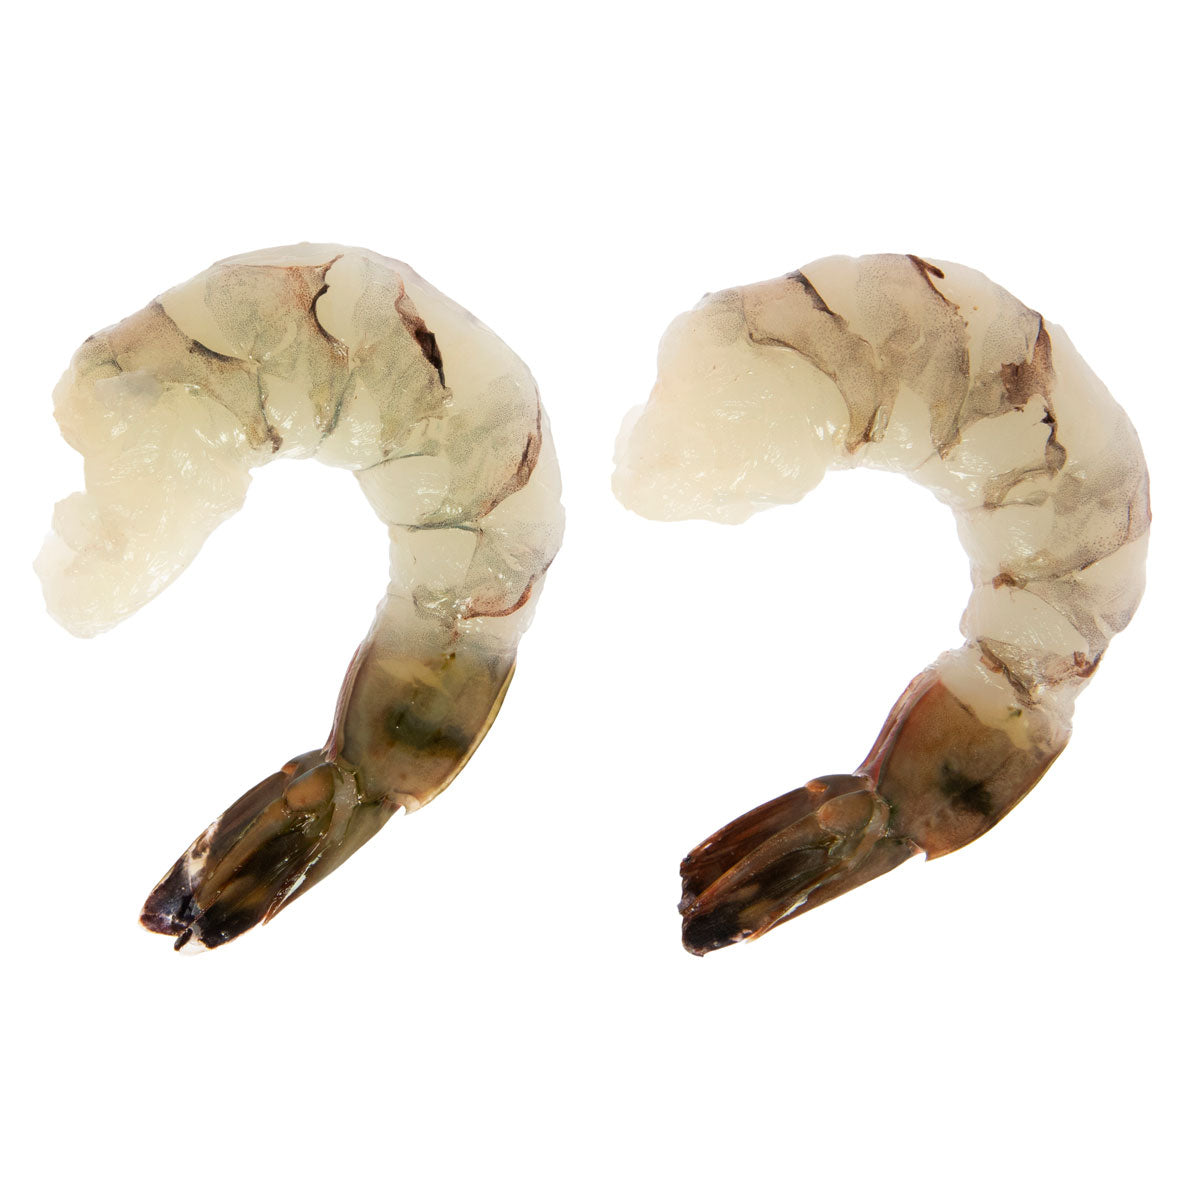 Apanie Frozen Peeled & Deveined Shrimp Tail On 8-12